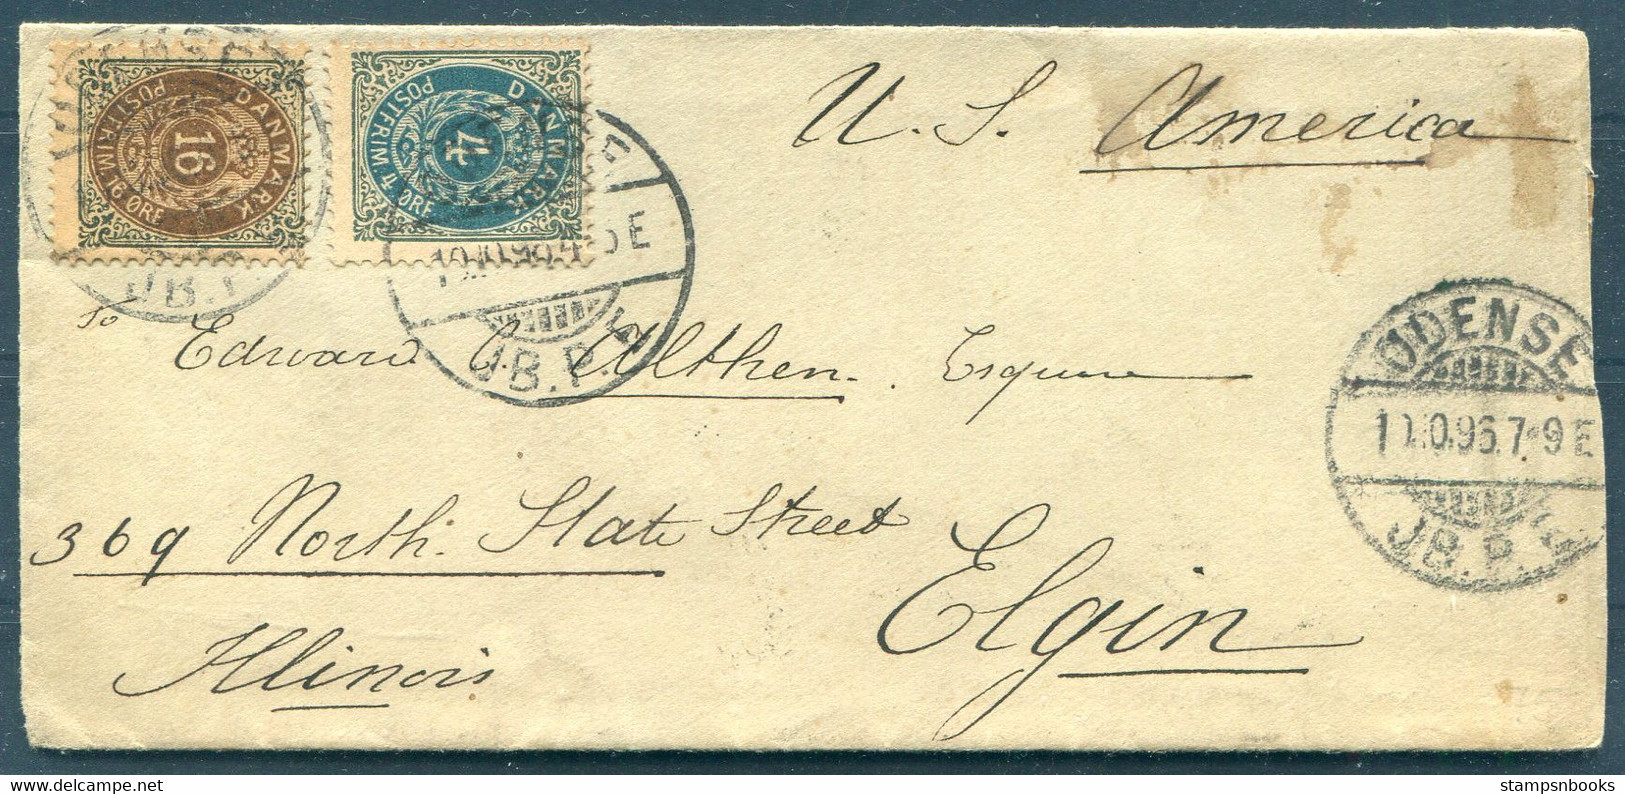 1896 Denmark 20ore Rate (16ore + 4ore) Odense J.B.P.E. Cover - Elgin Illinois USA Via New York. - Storia Postale